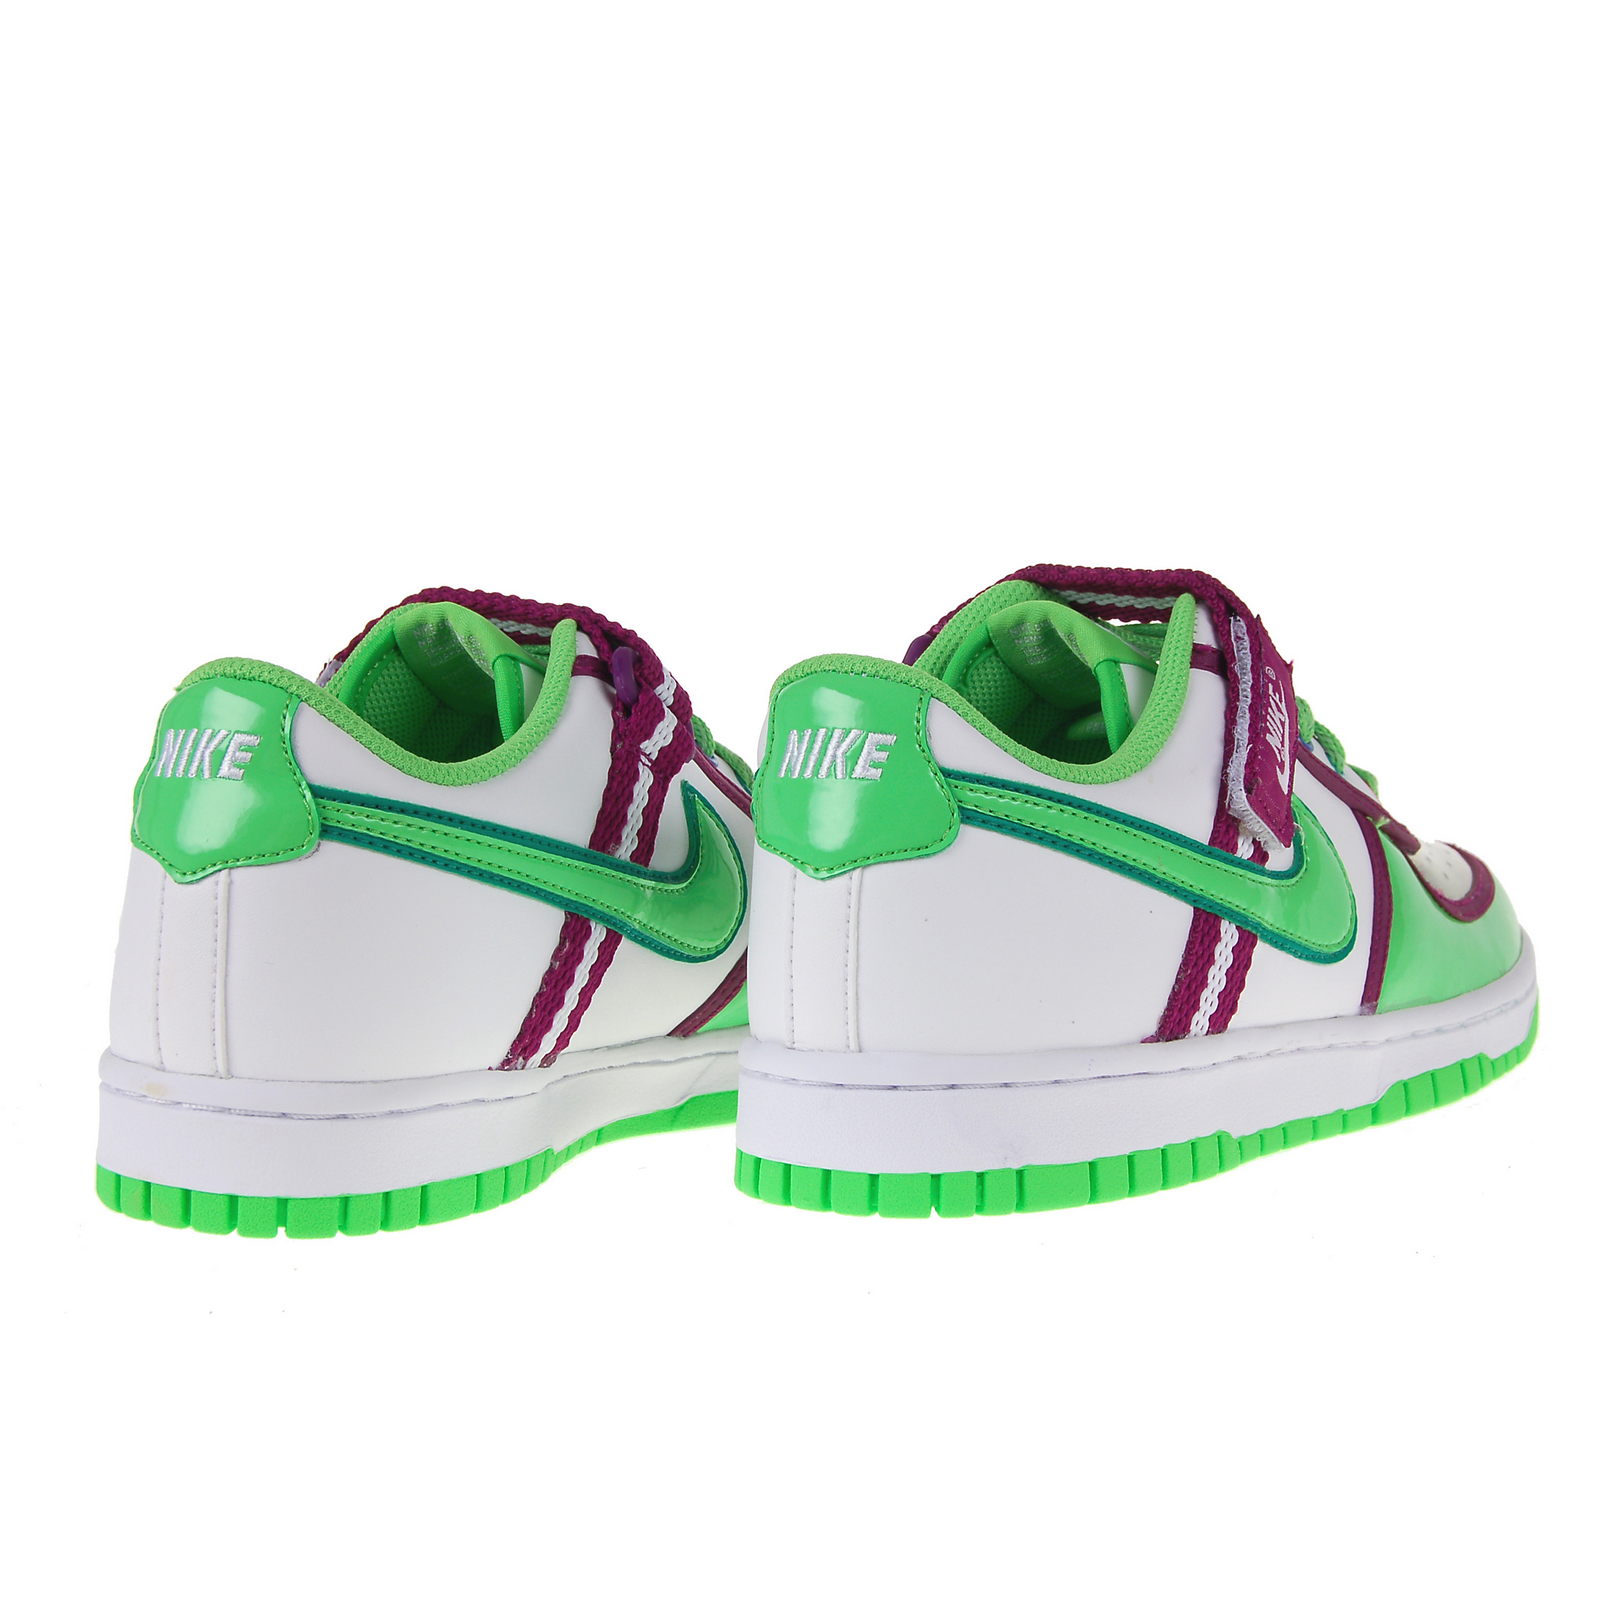 Nike Vandal Low - 314675-131 - Sneakerhead.com â SNEAKERHEAD.com